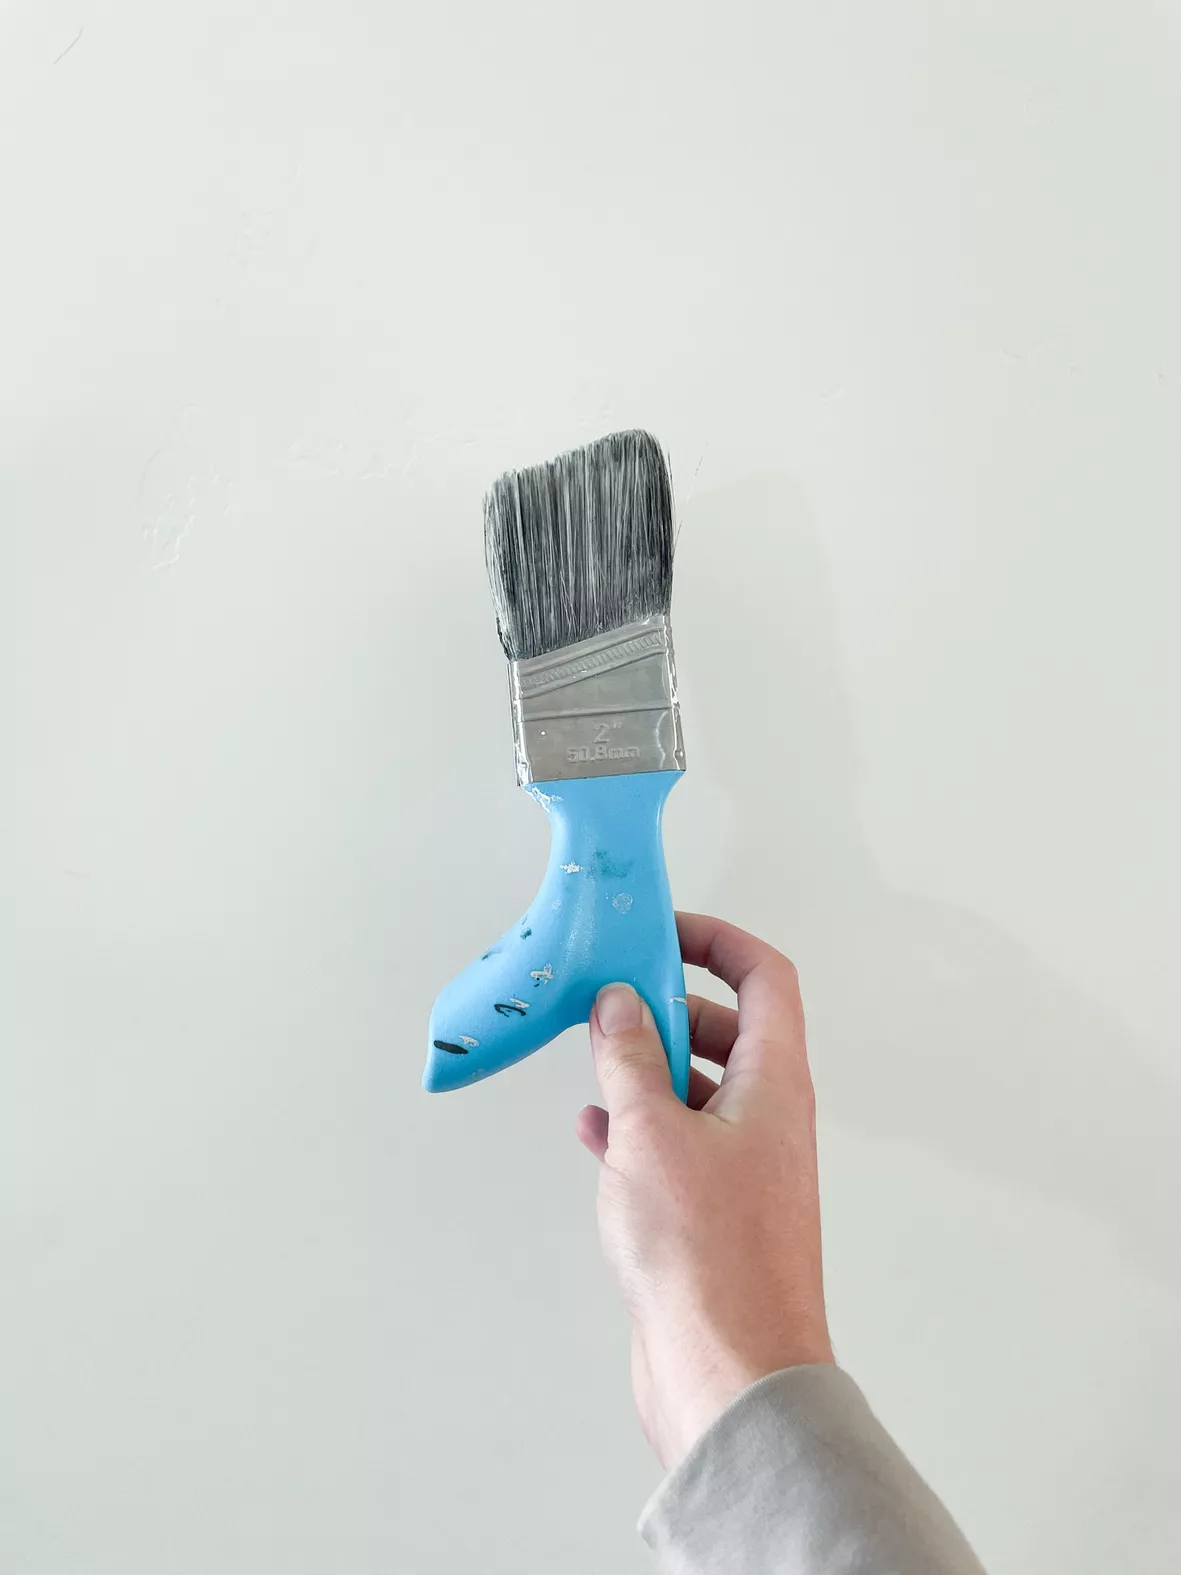 Freeform 1.5 All-Purpose Grip-Free Fatigue Reducing Paint Brush